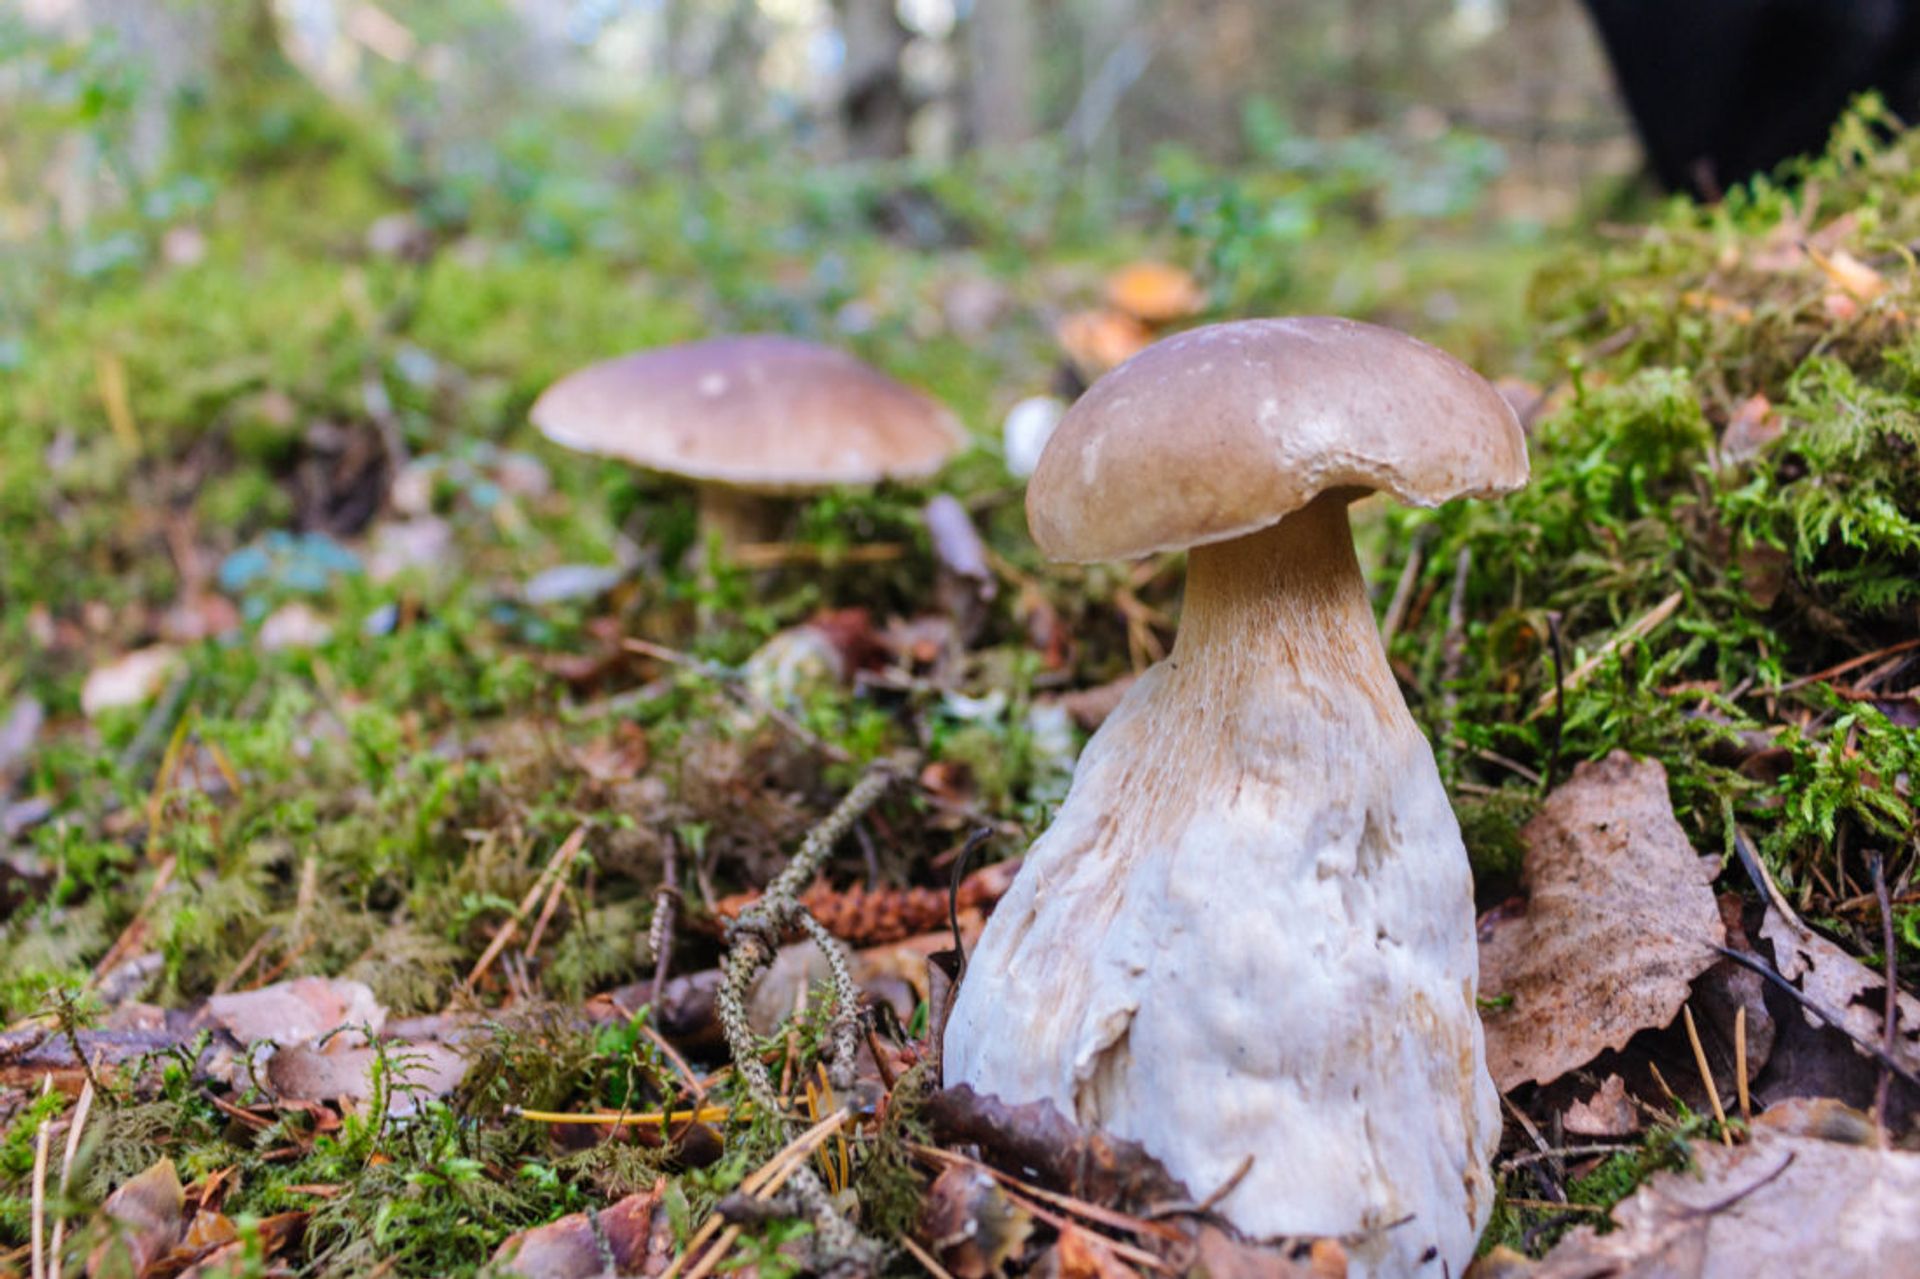 Close up of a Karl Johan mushroom.